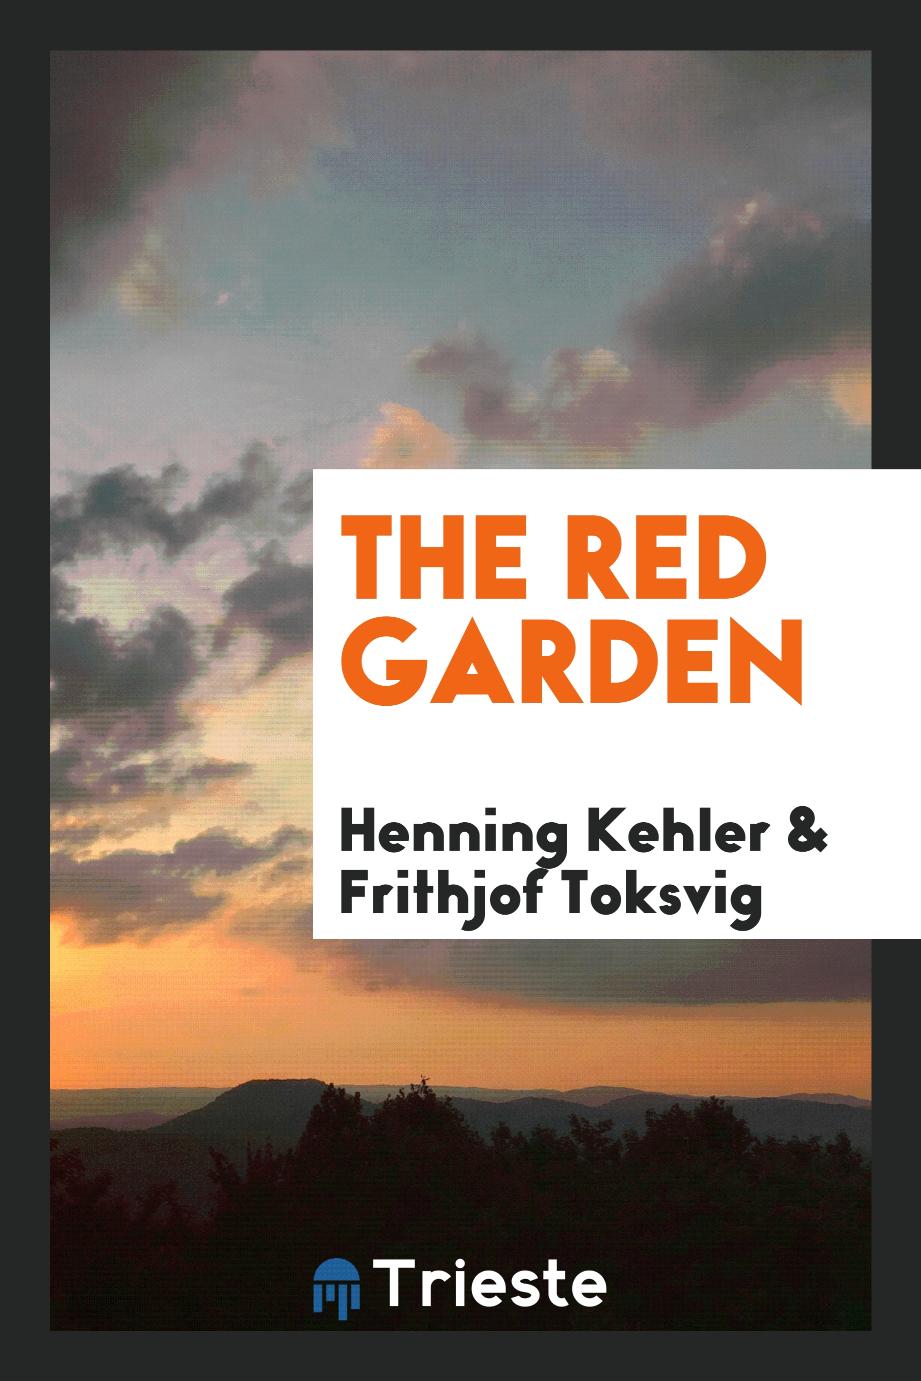 The red garden